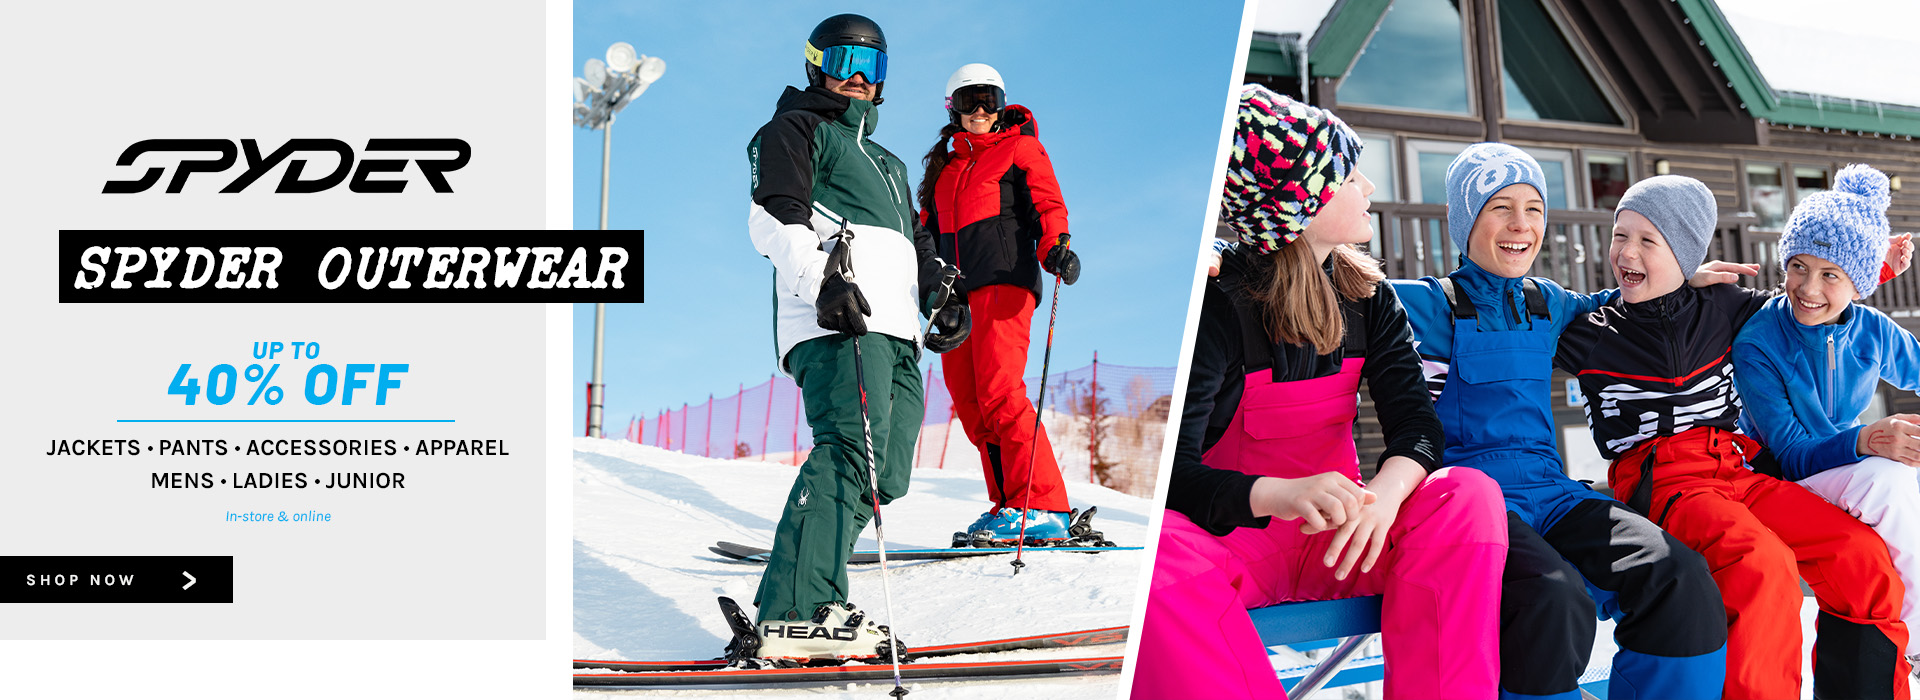 Apparel - Womens - Pants - Page 1 - Corbetts Ski + Snowboard